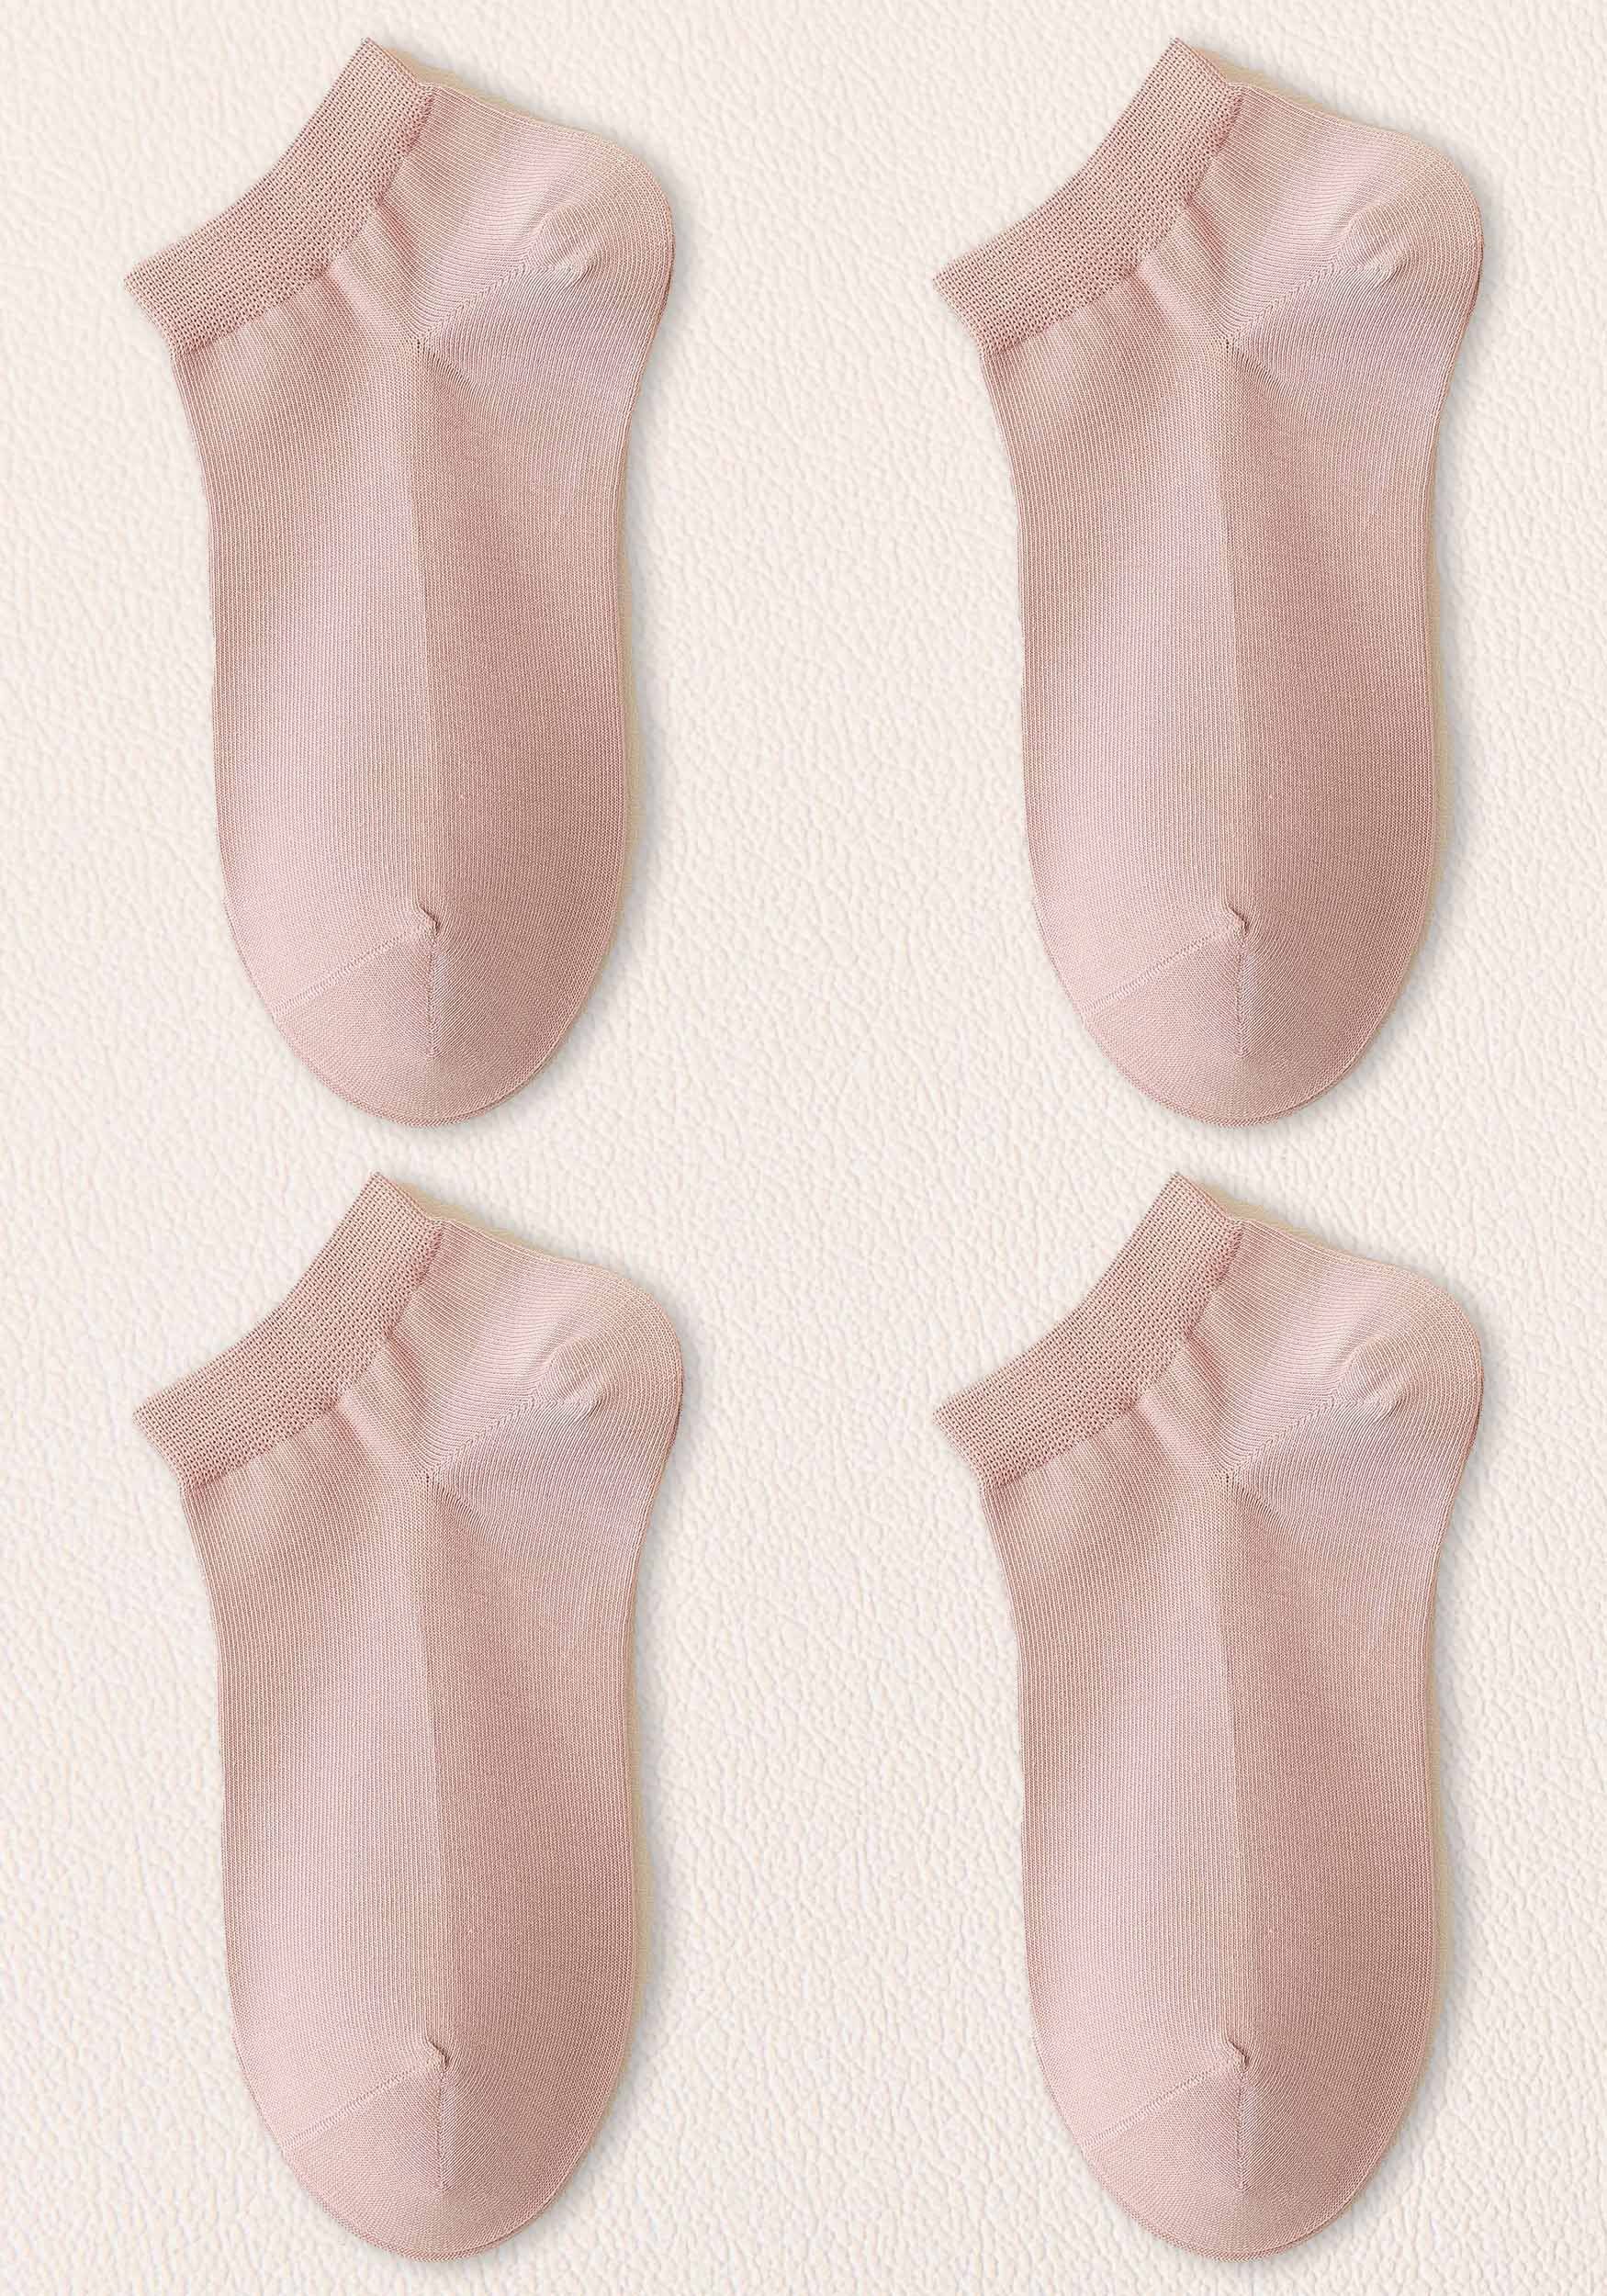 Socken– (4-Paar) Freizeitsocken Damen atmungsaktiv,lange Socken Verrutschen Rosa MAGICSHE kein Invisible haltbar, warm, bequem Sneakersocken